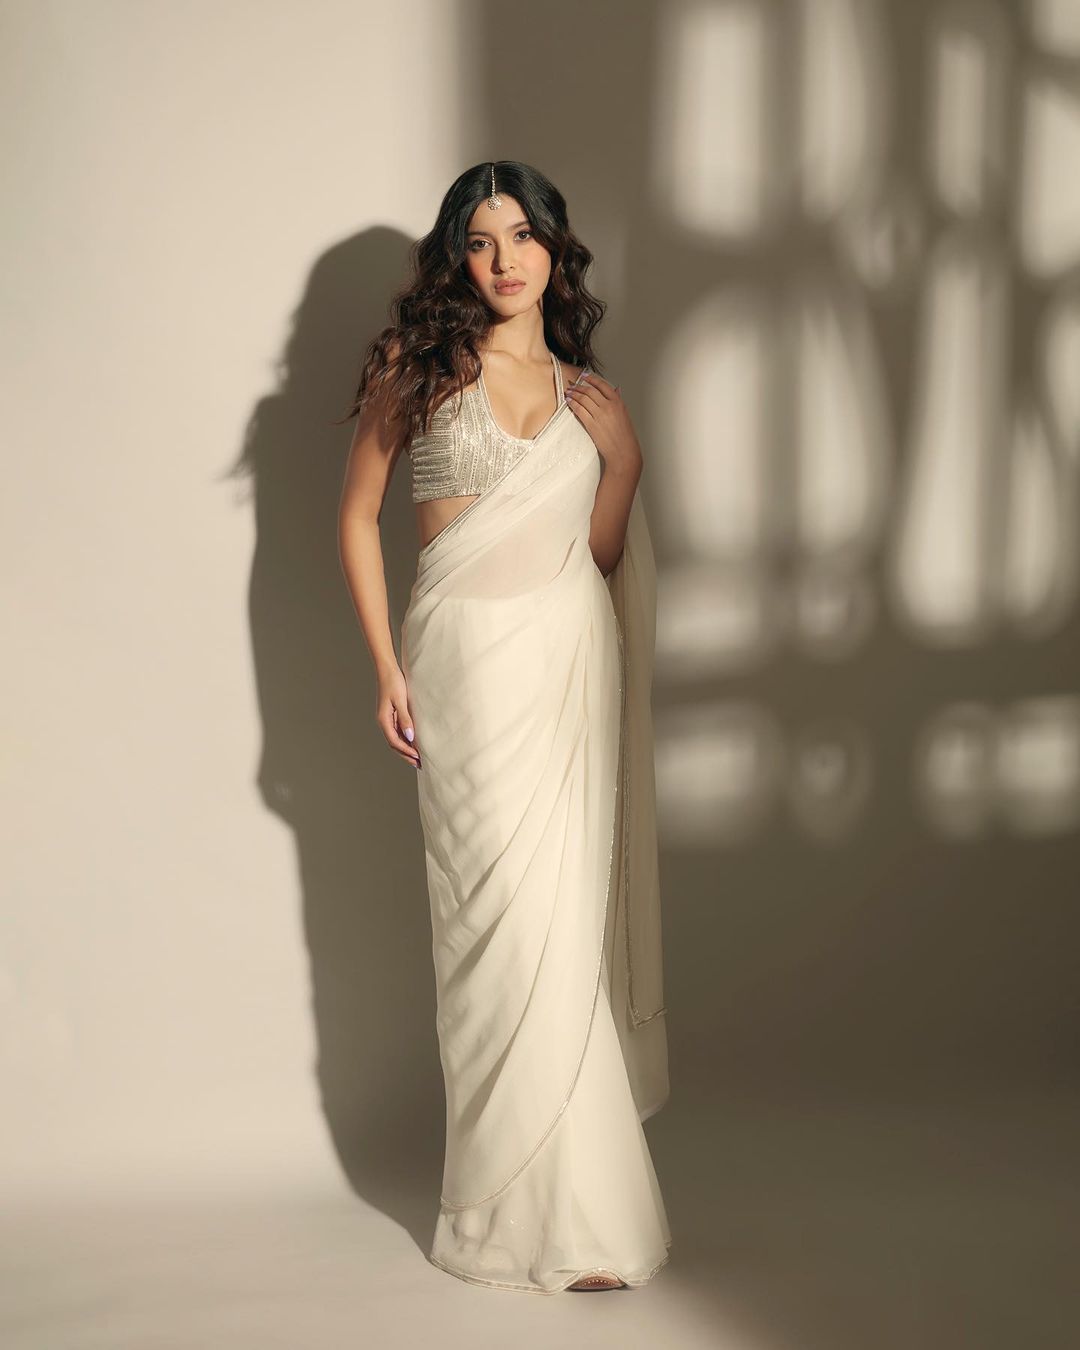 Shanaya Kapoor looks breathtaking in the white chiffon saree